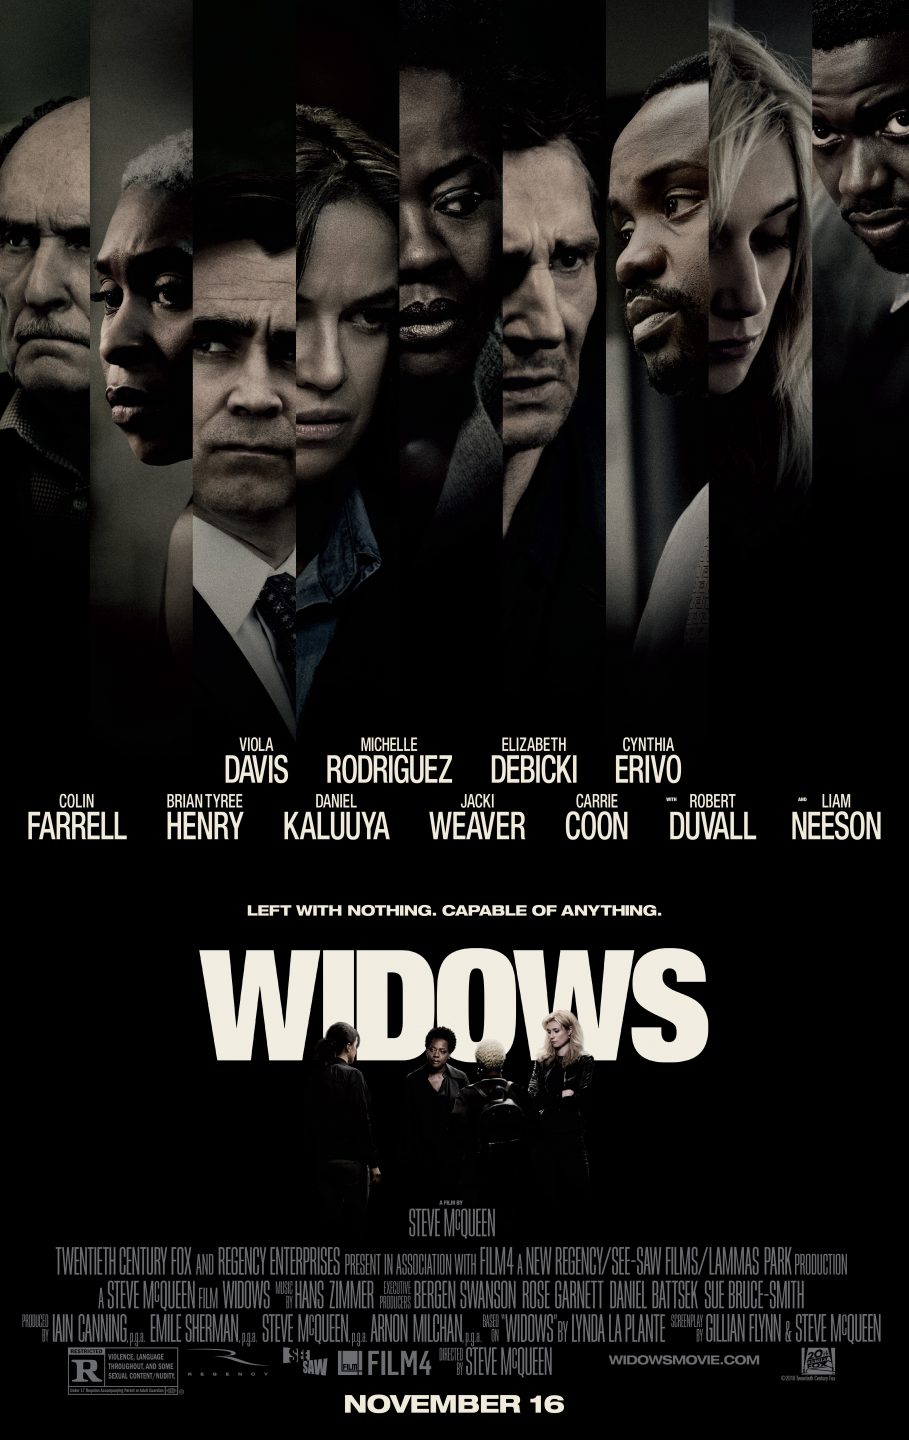 Widows poster (20th Century Fox)